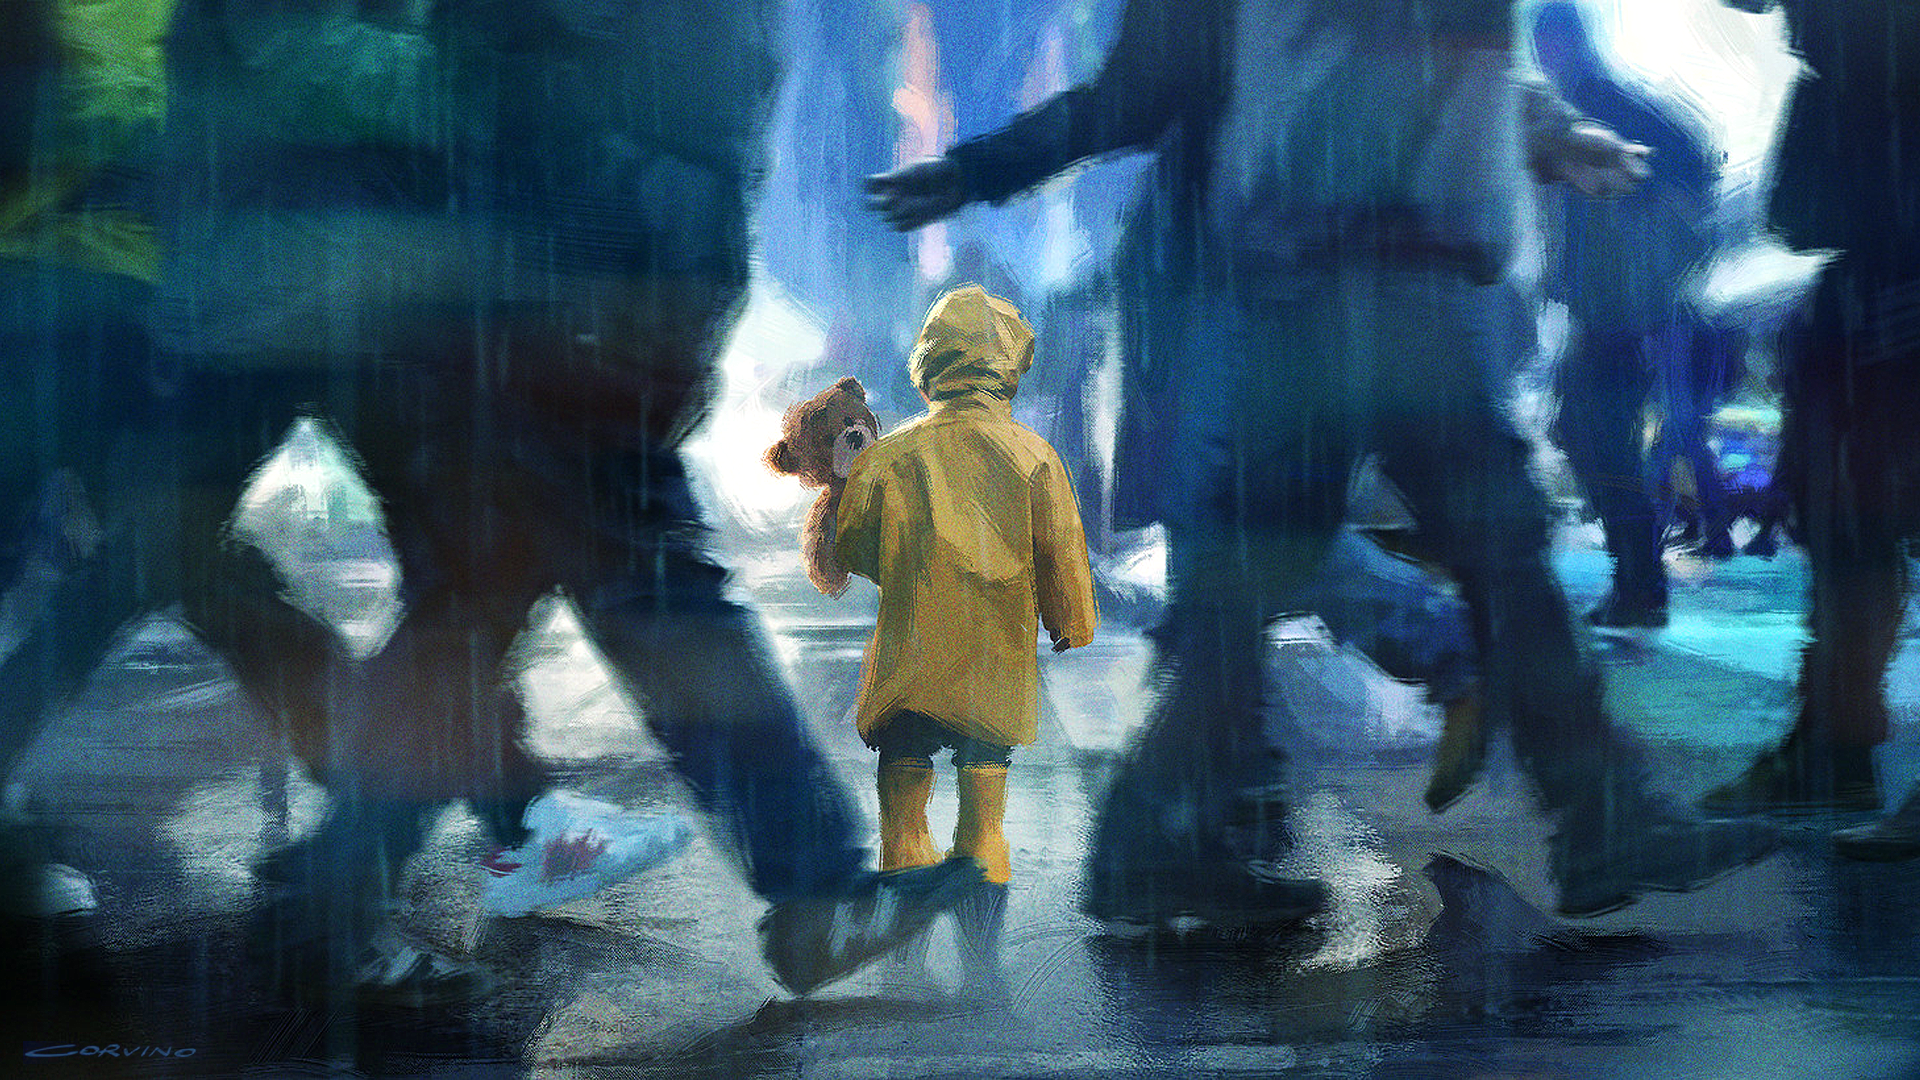 Francesco Corvino Digital Art Artwork Alone Children Teddy Bears Yellow Clothing City Walking Street 1920x1080